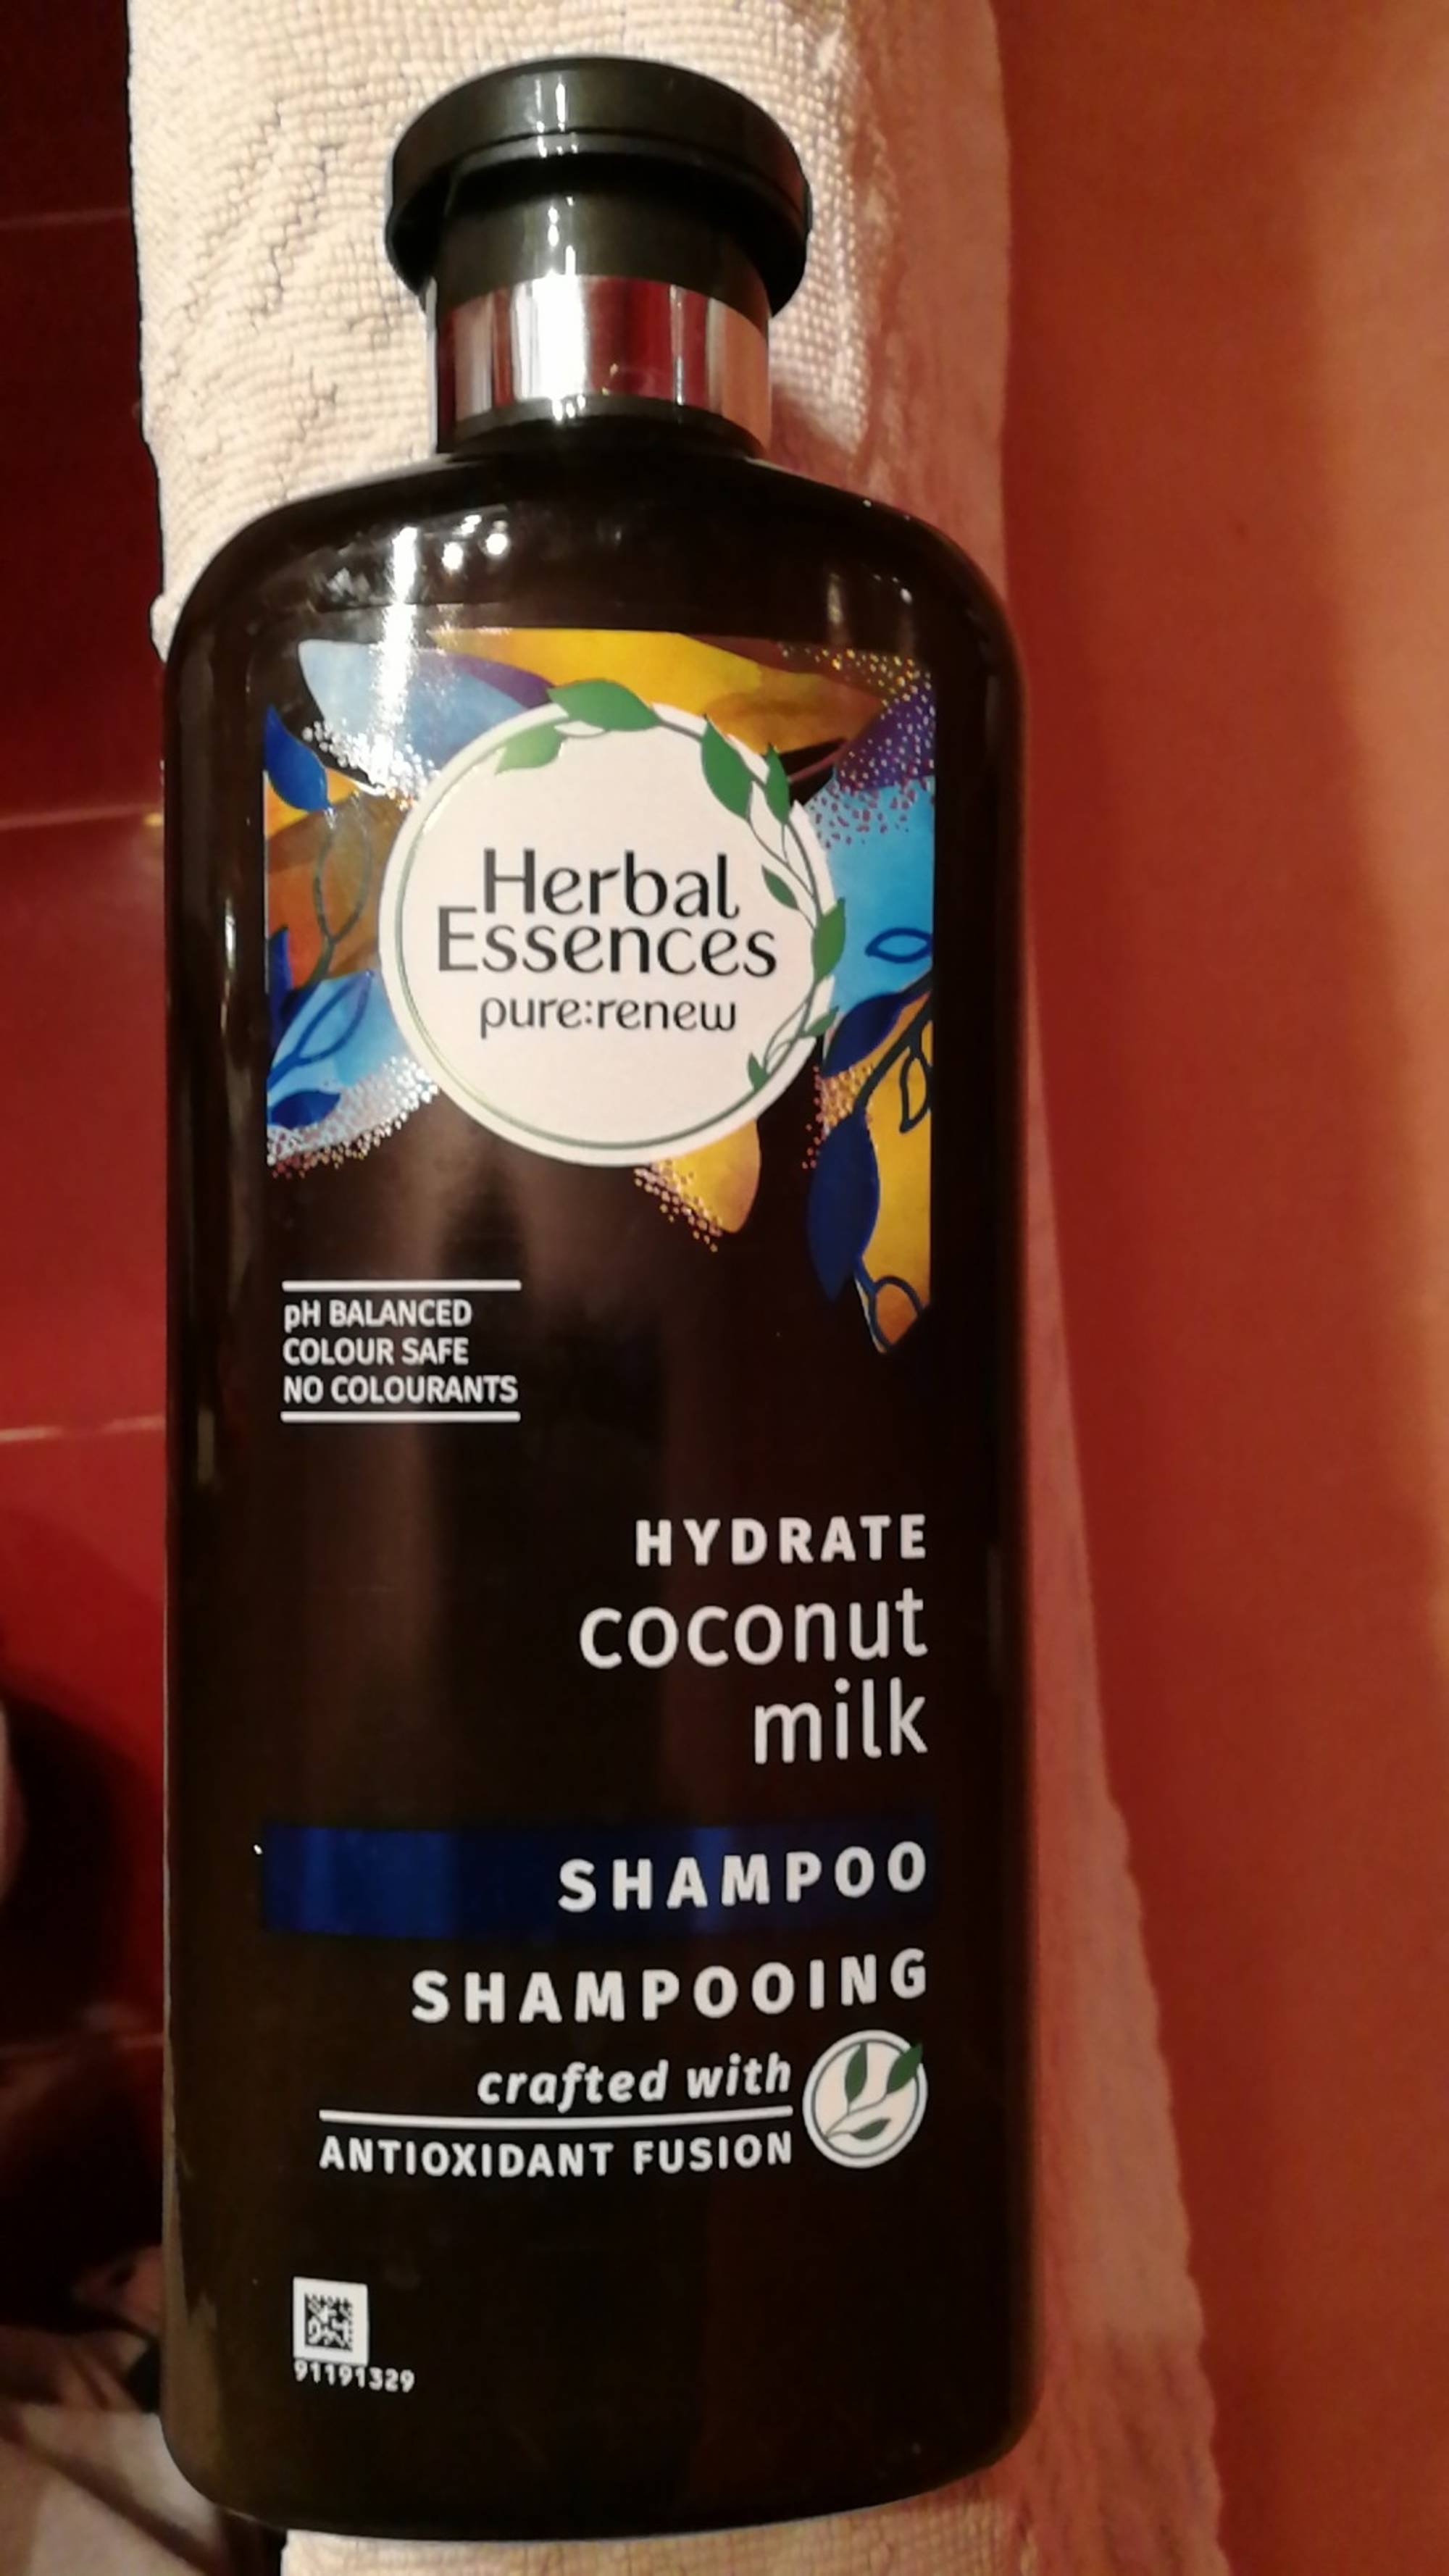 HERBAL ESSENCES - Shampooing hydrate coconut milk